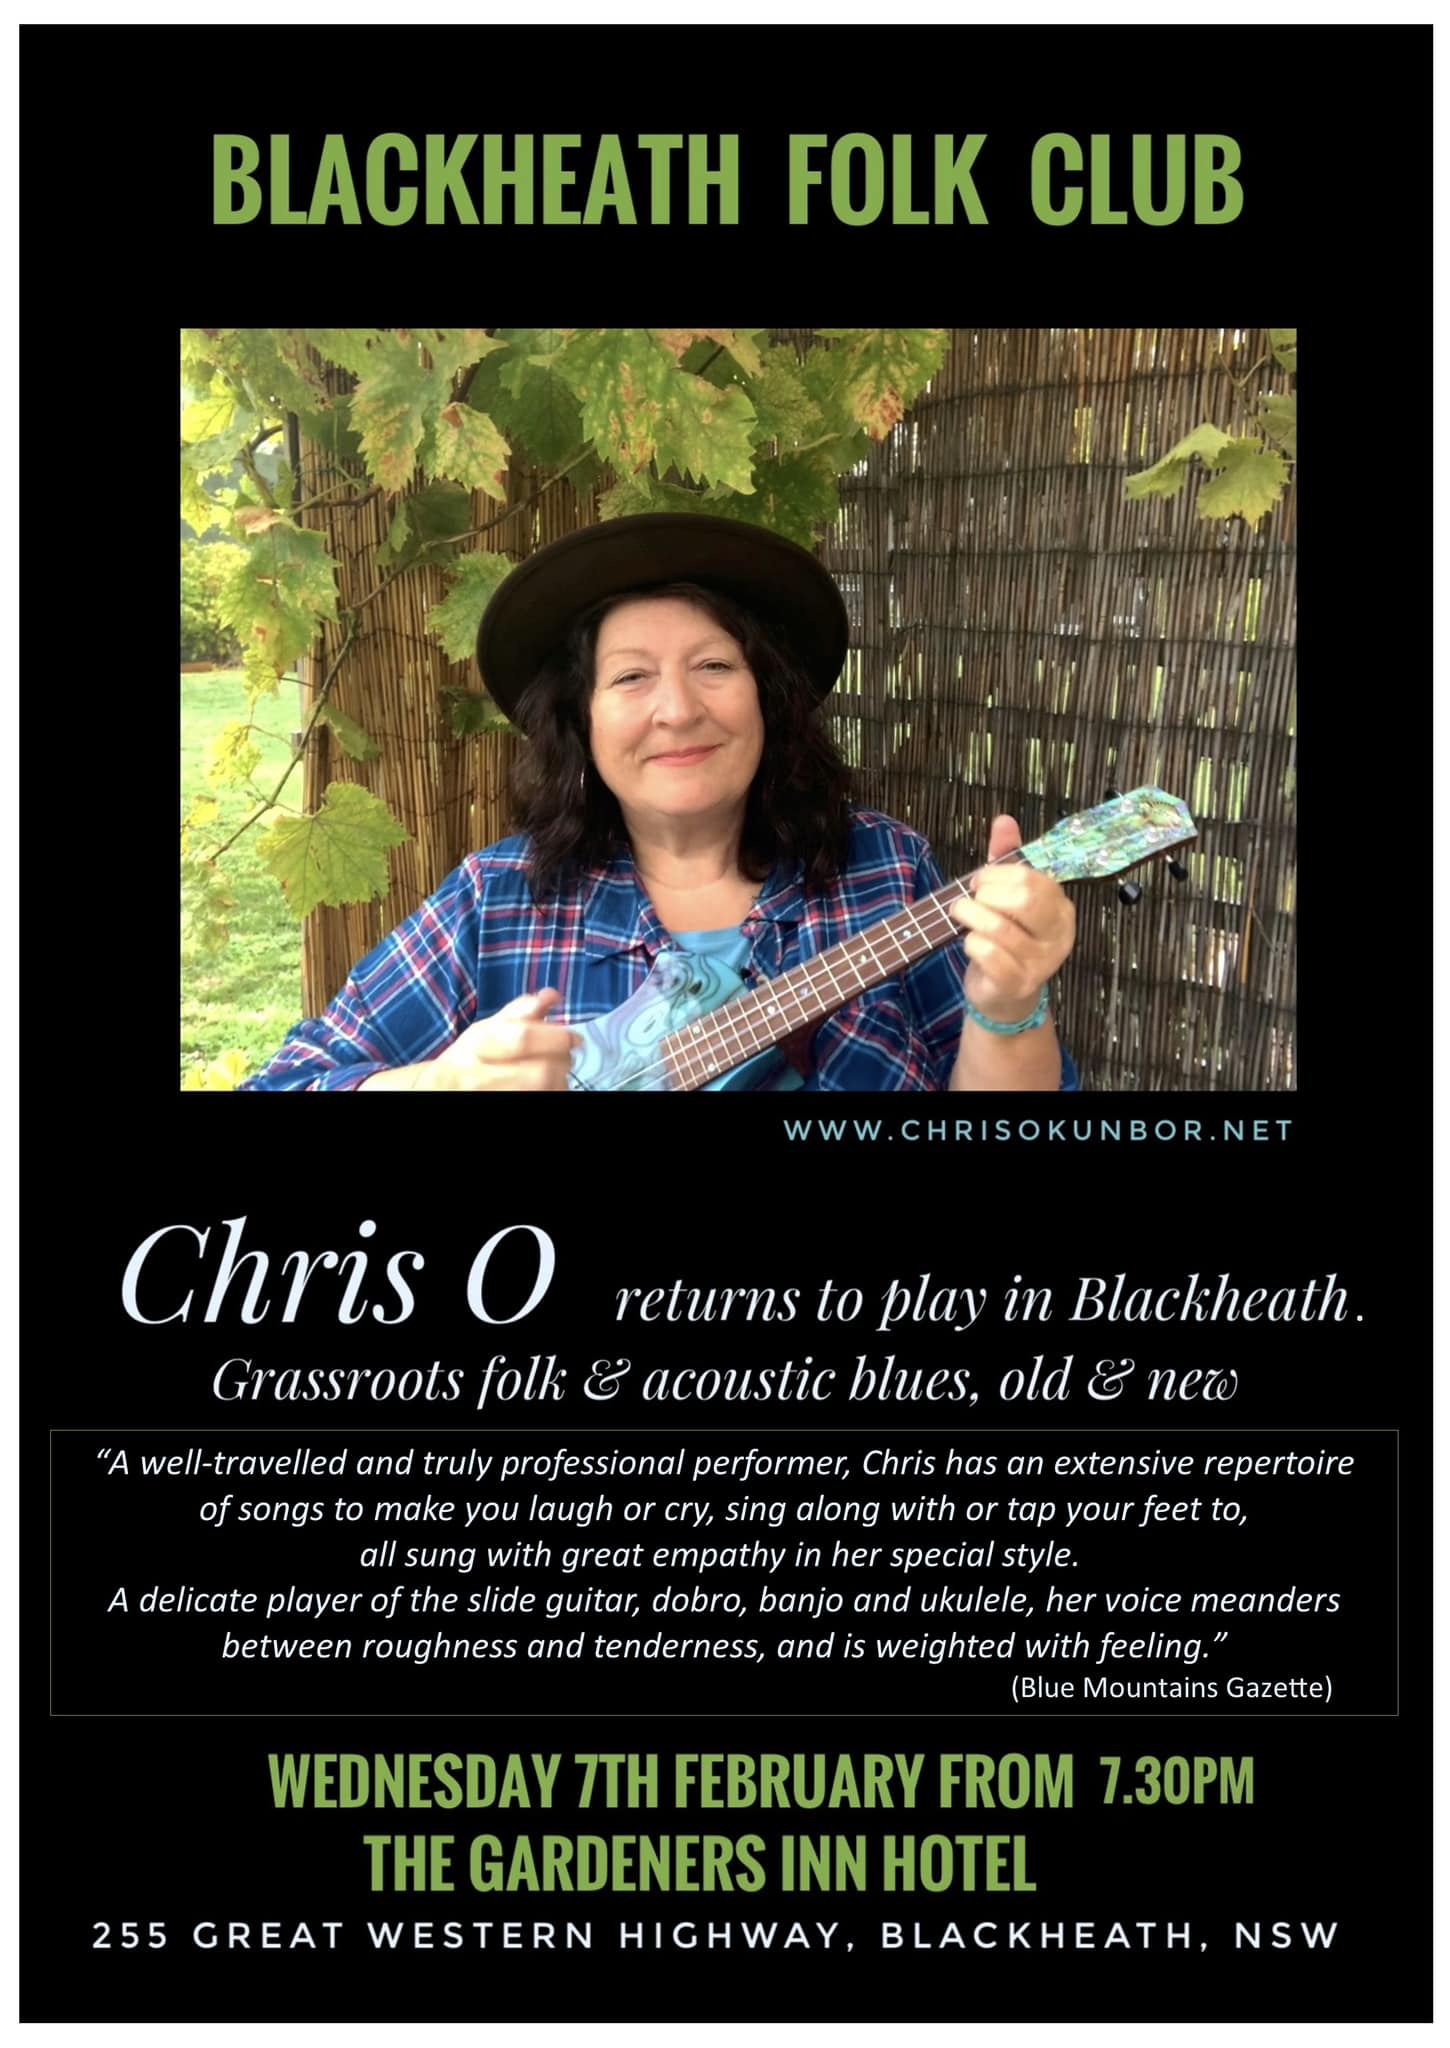 Chris O returns to Blackheath Folk Club